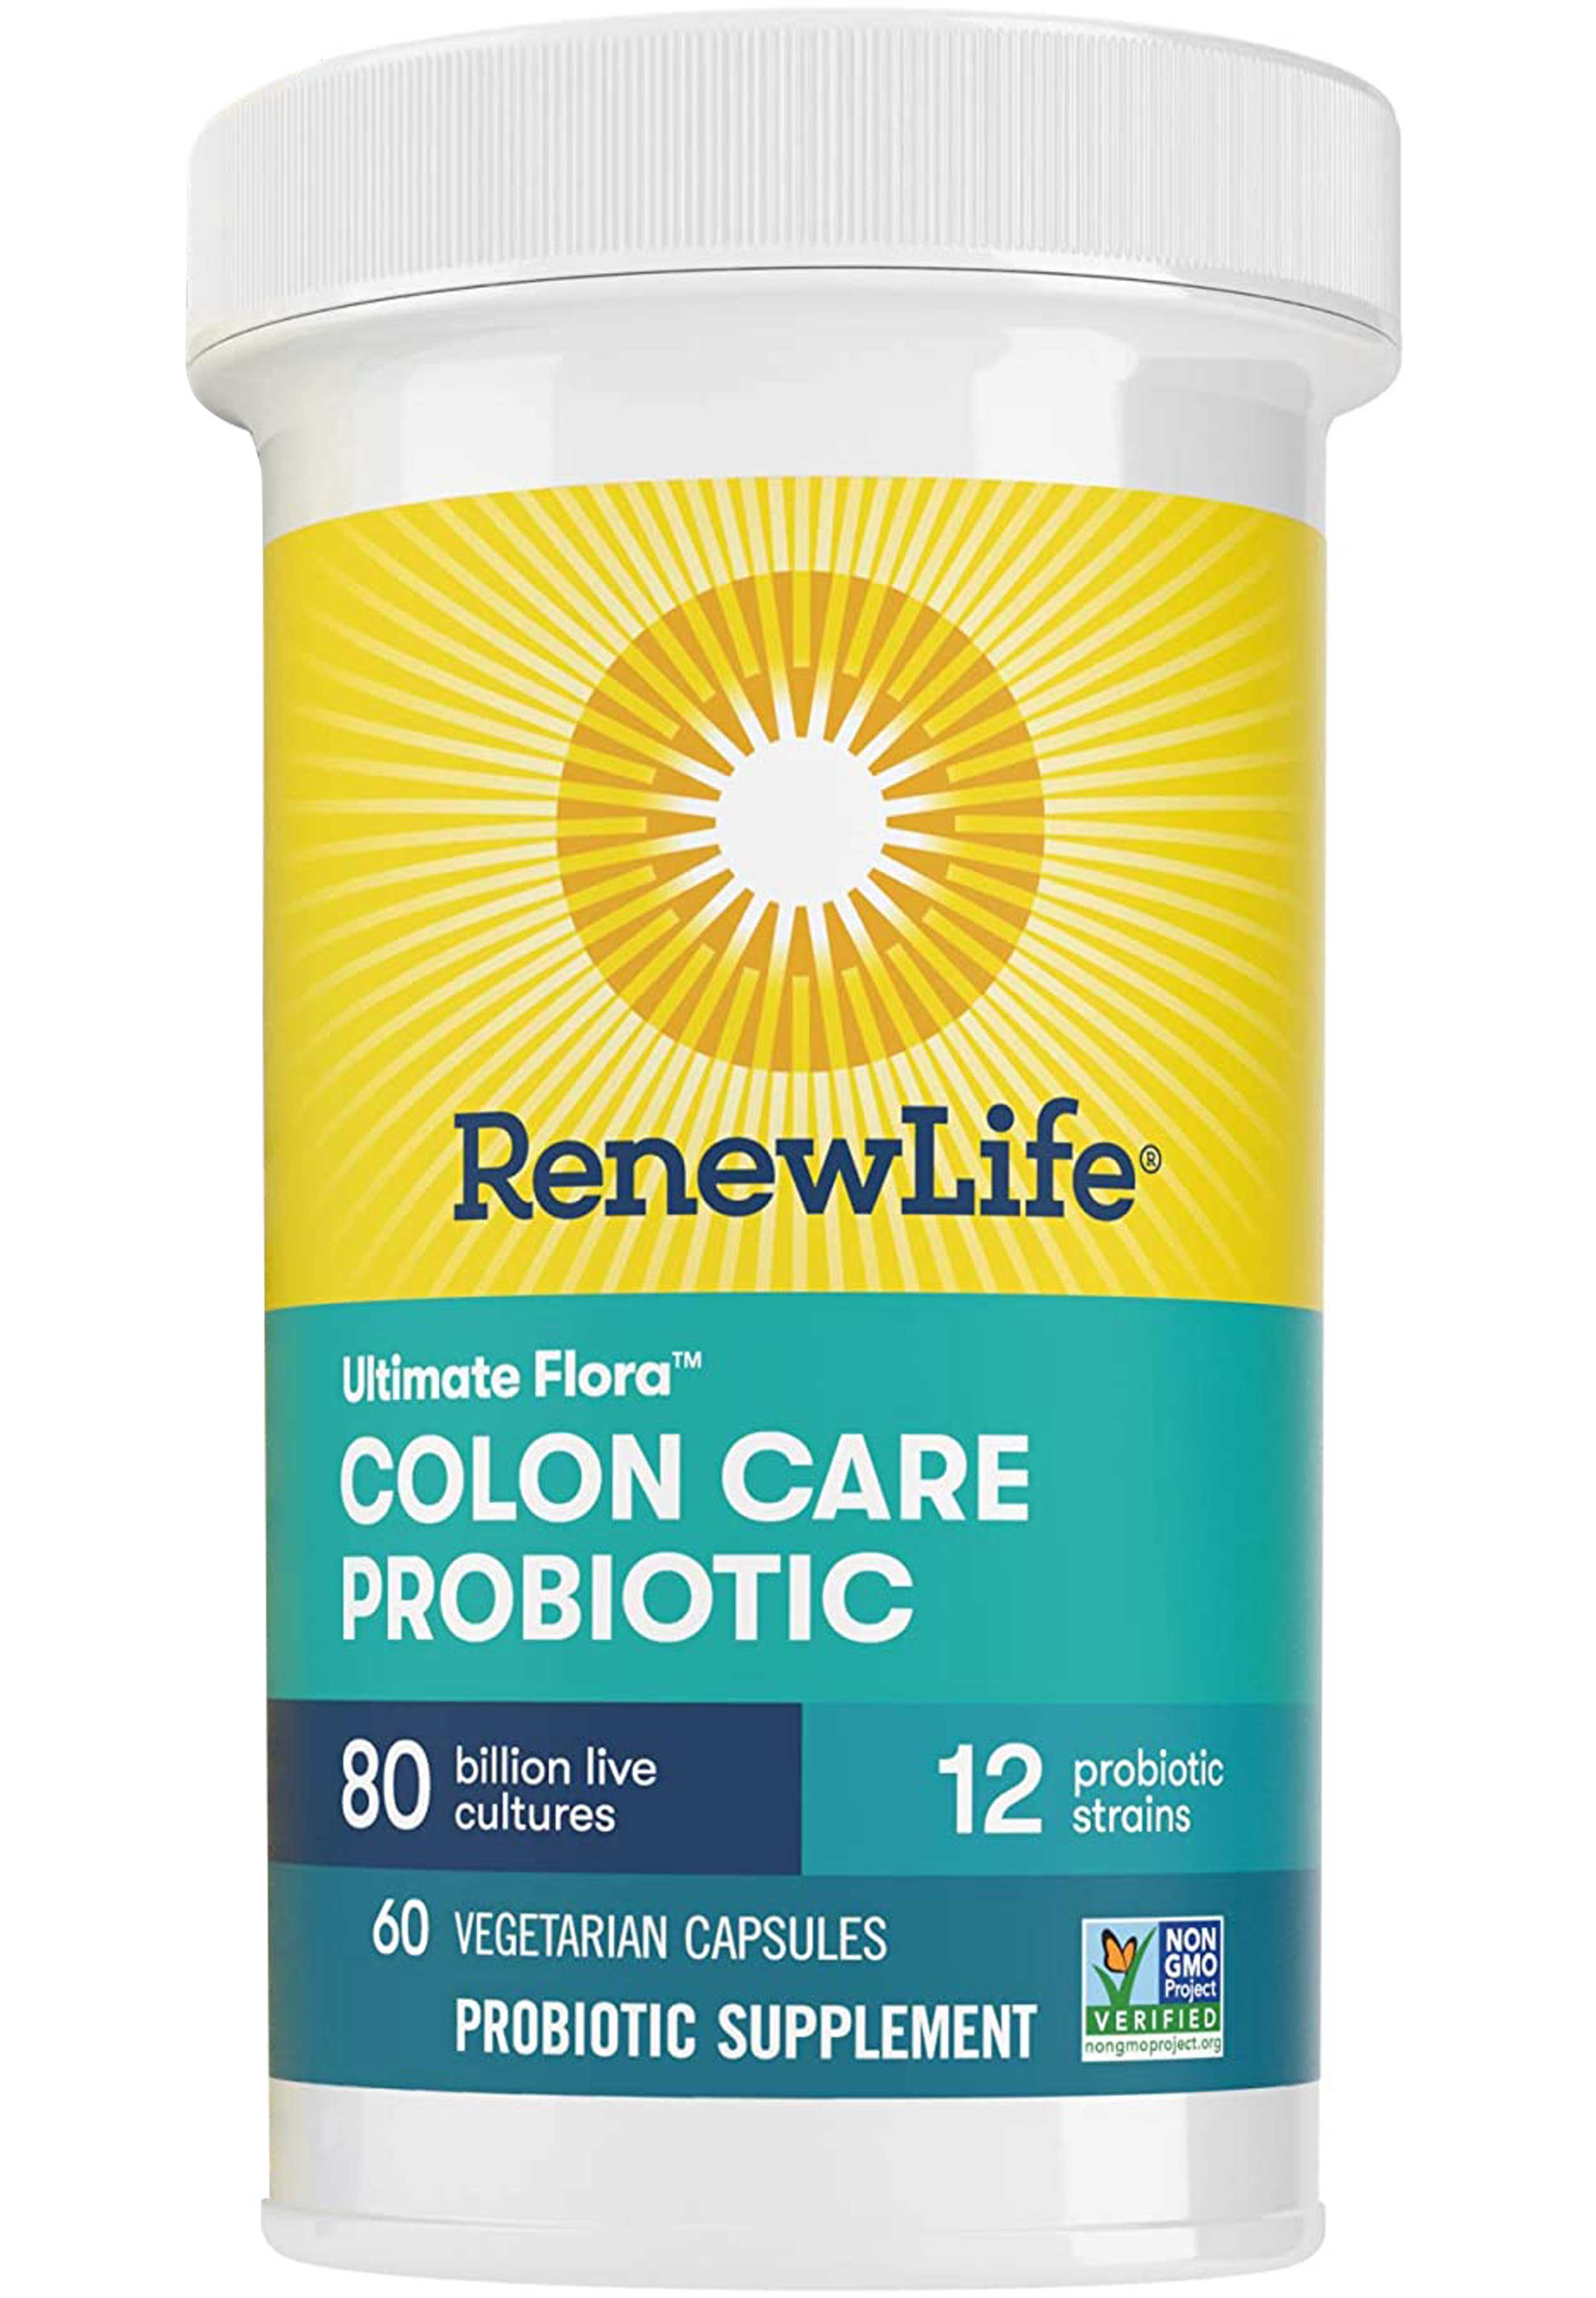 Renew Life Ultimate Flora Colon Care Probiotic 80 Billion